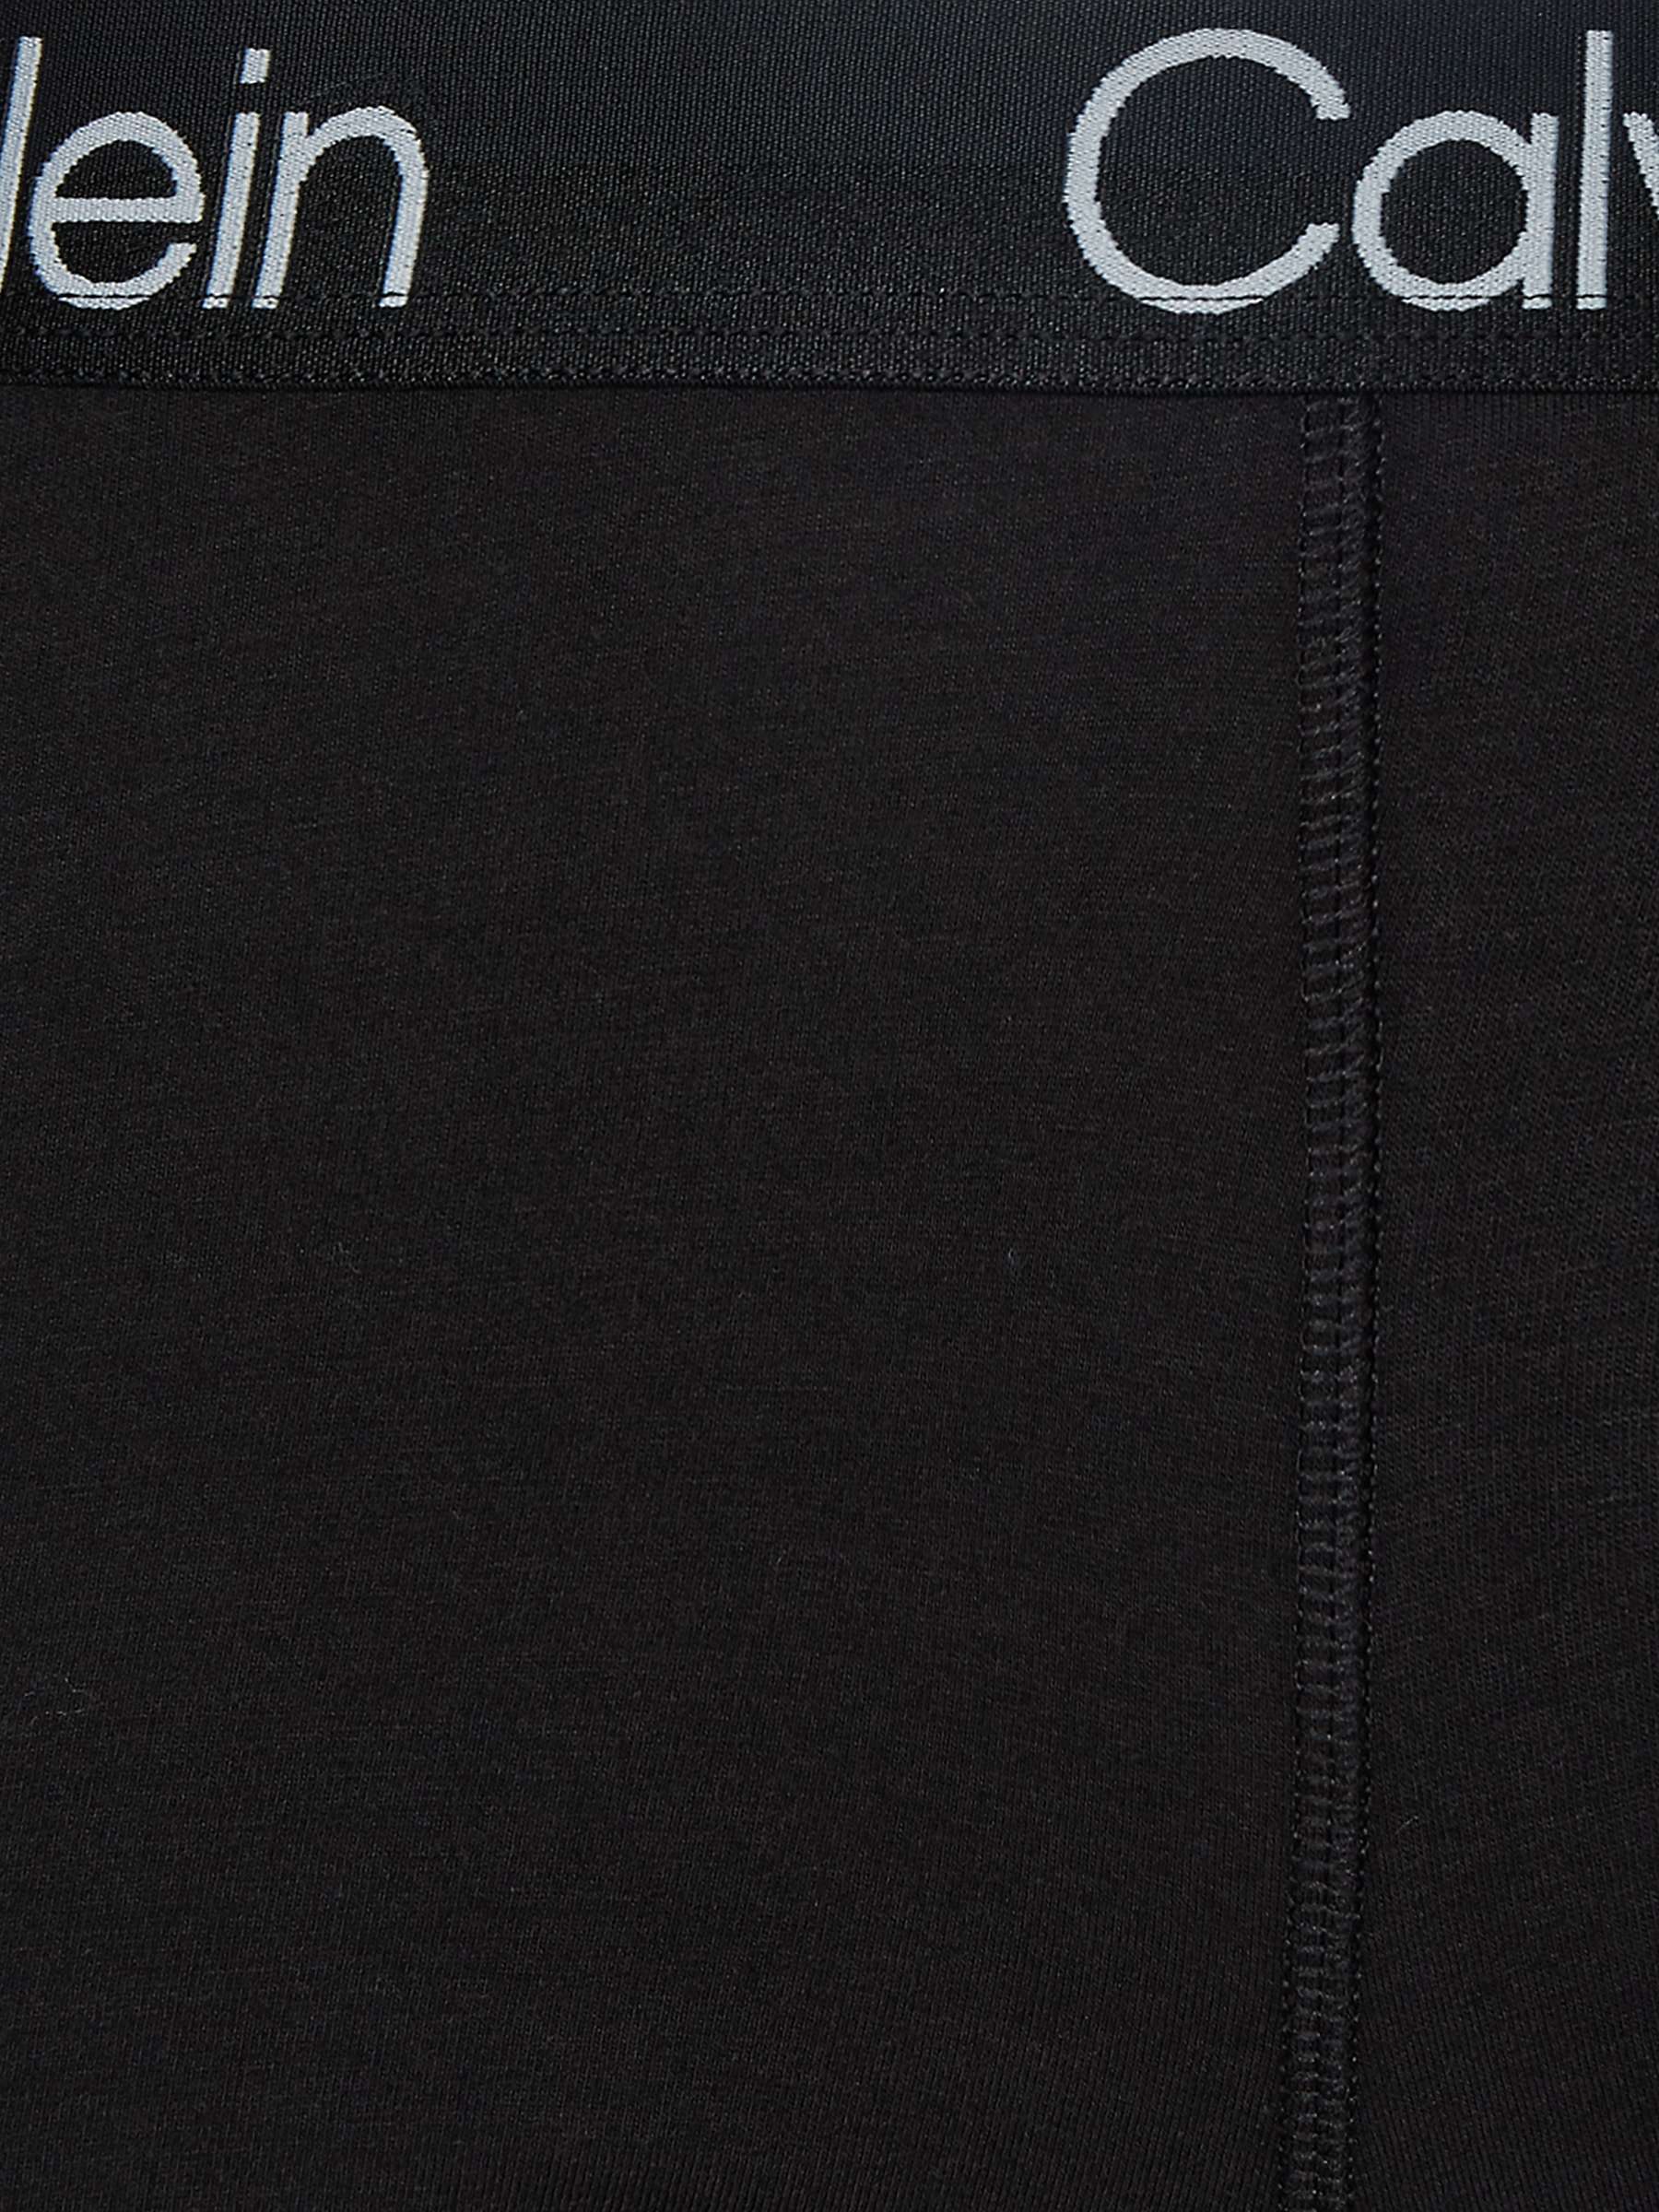 Buy Calvin Klein Cotton Stretch Regular Fit Boxer Briefs, Pack of 3, Black Online at johnlewis.com